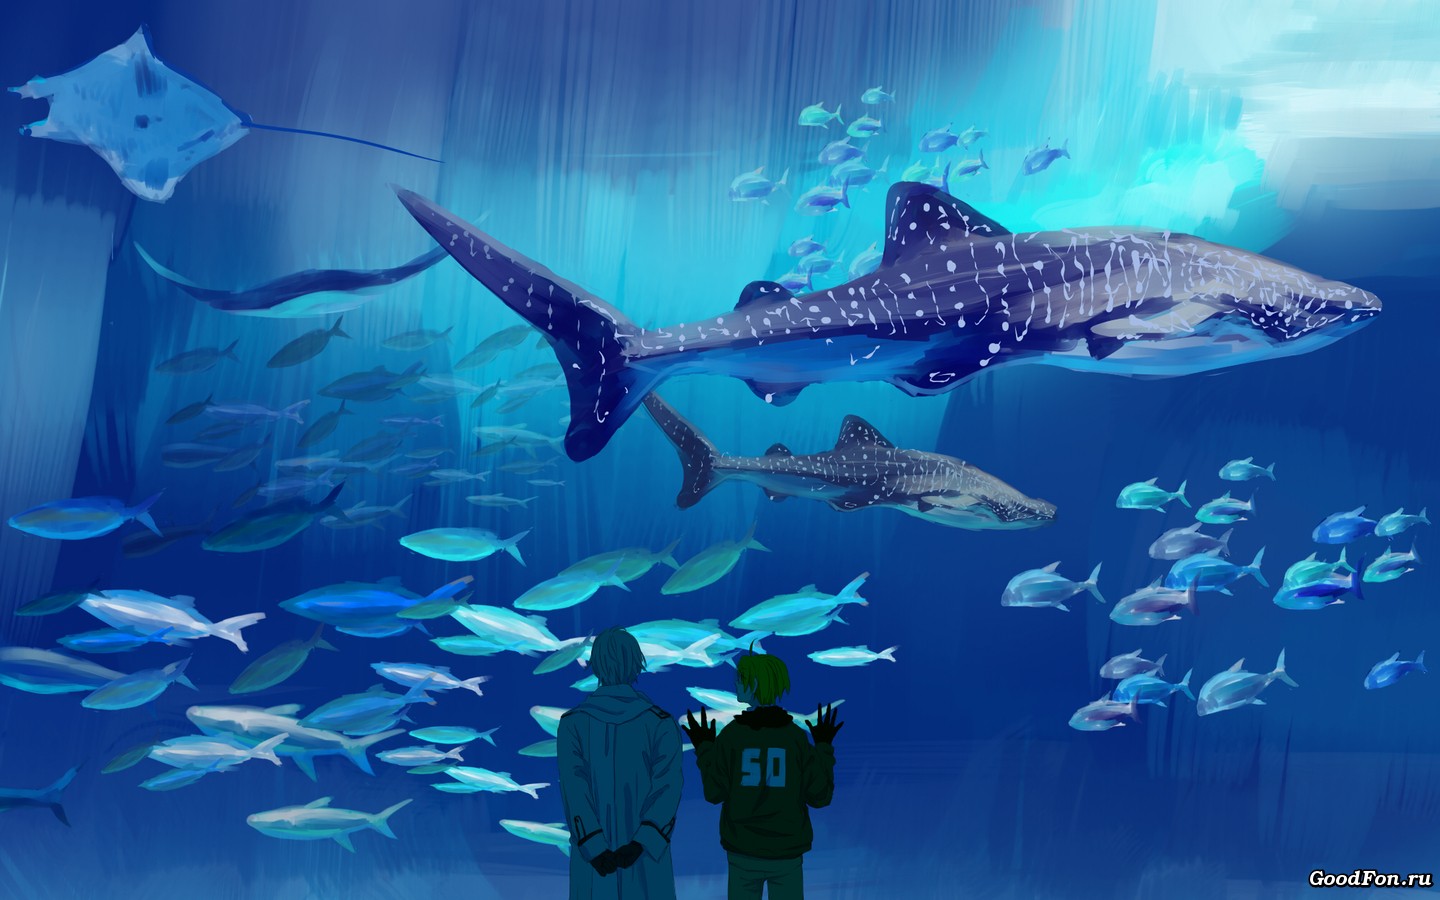 General 1440x900 CGI artwork anime cyan blue fish animals